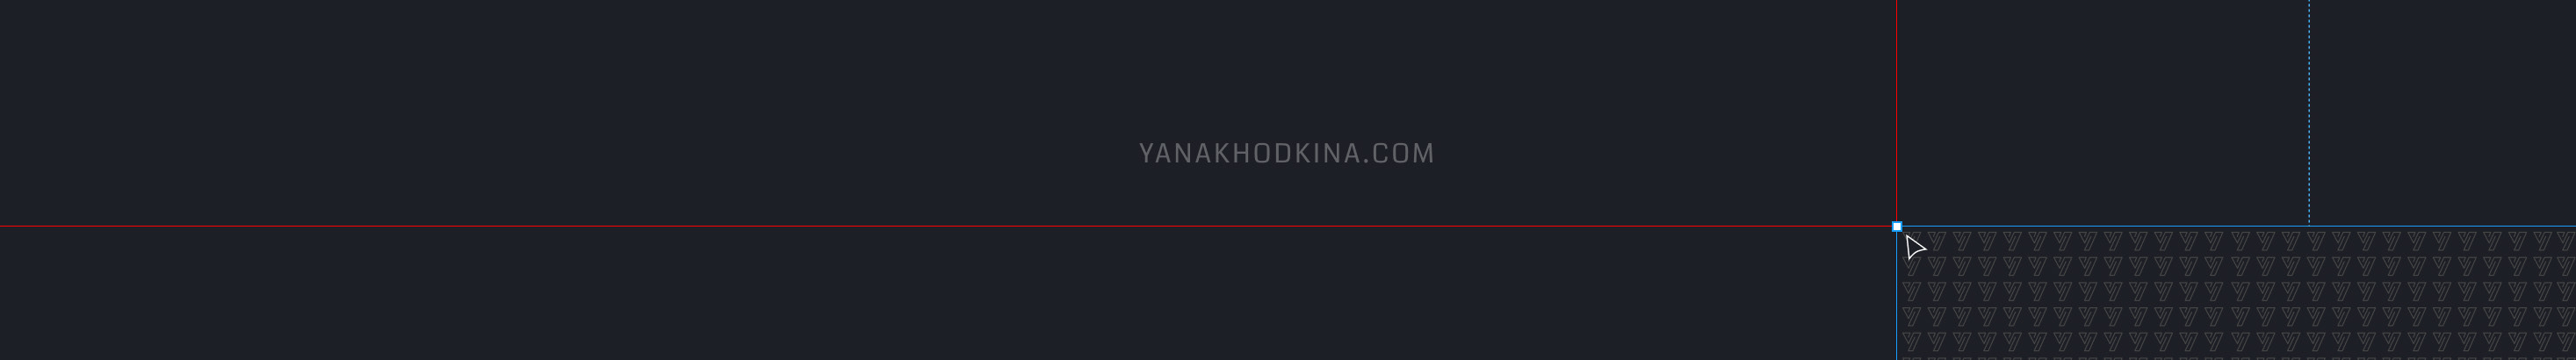 Yana Khodkina's profile banner